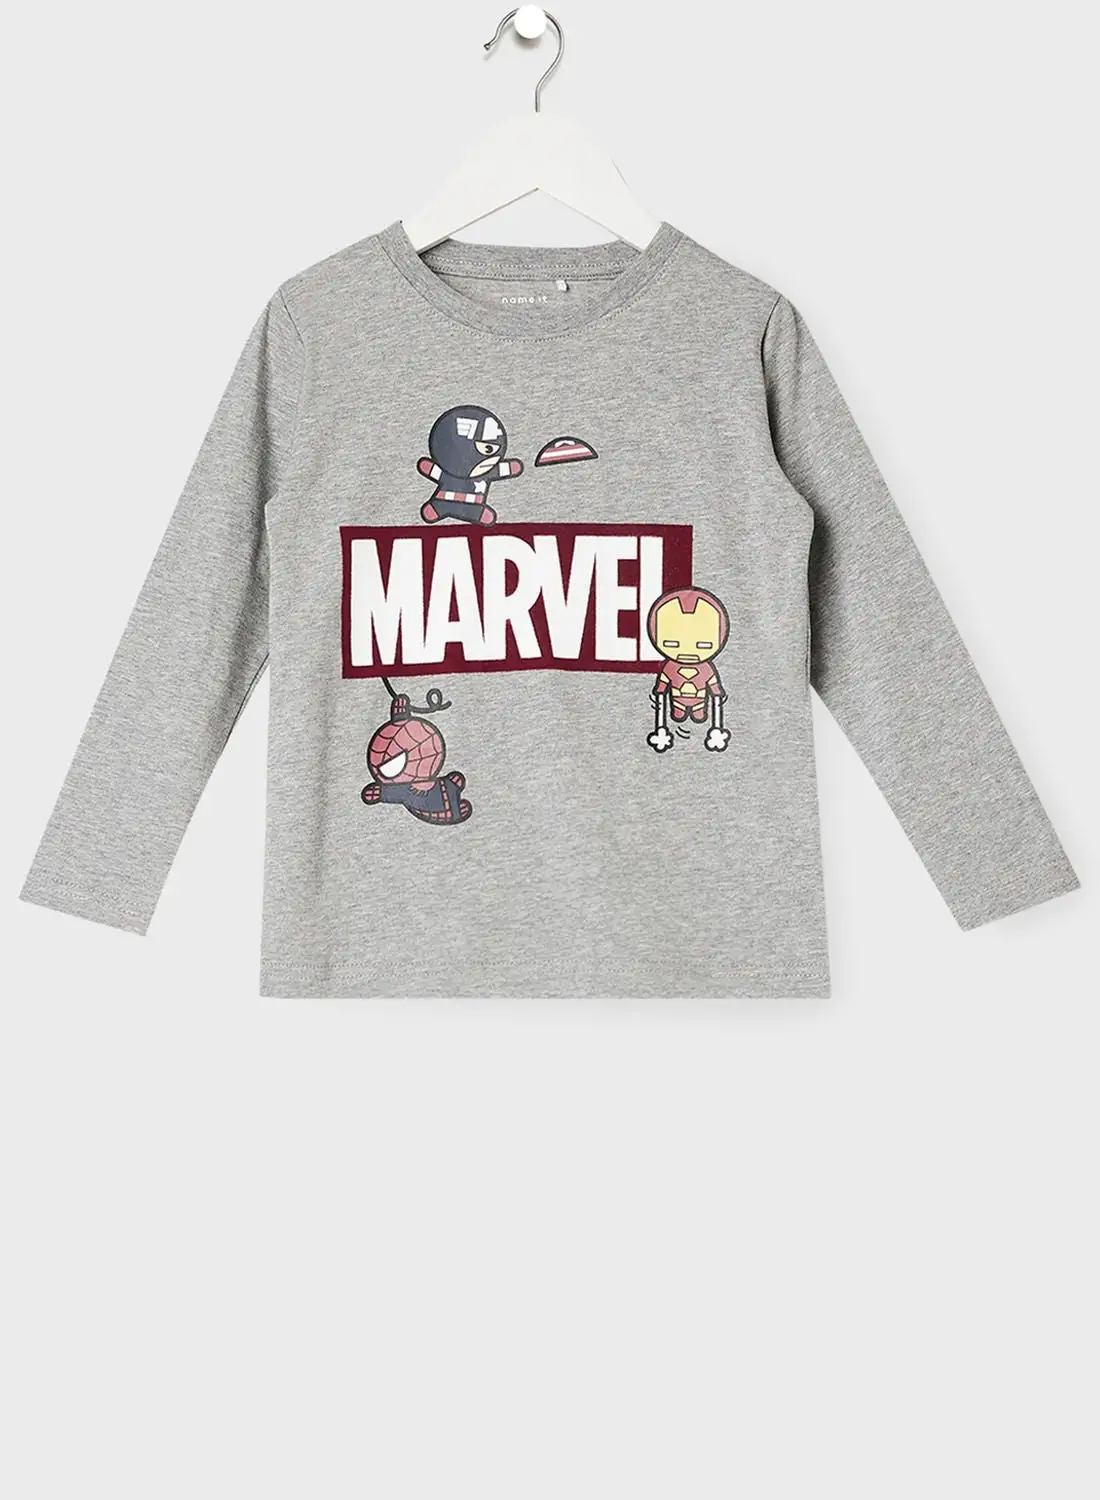 NAME IT Kids Marvel T-Shirt